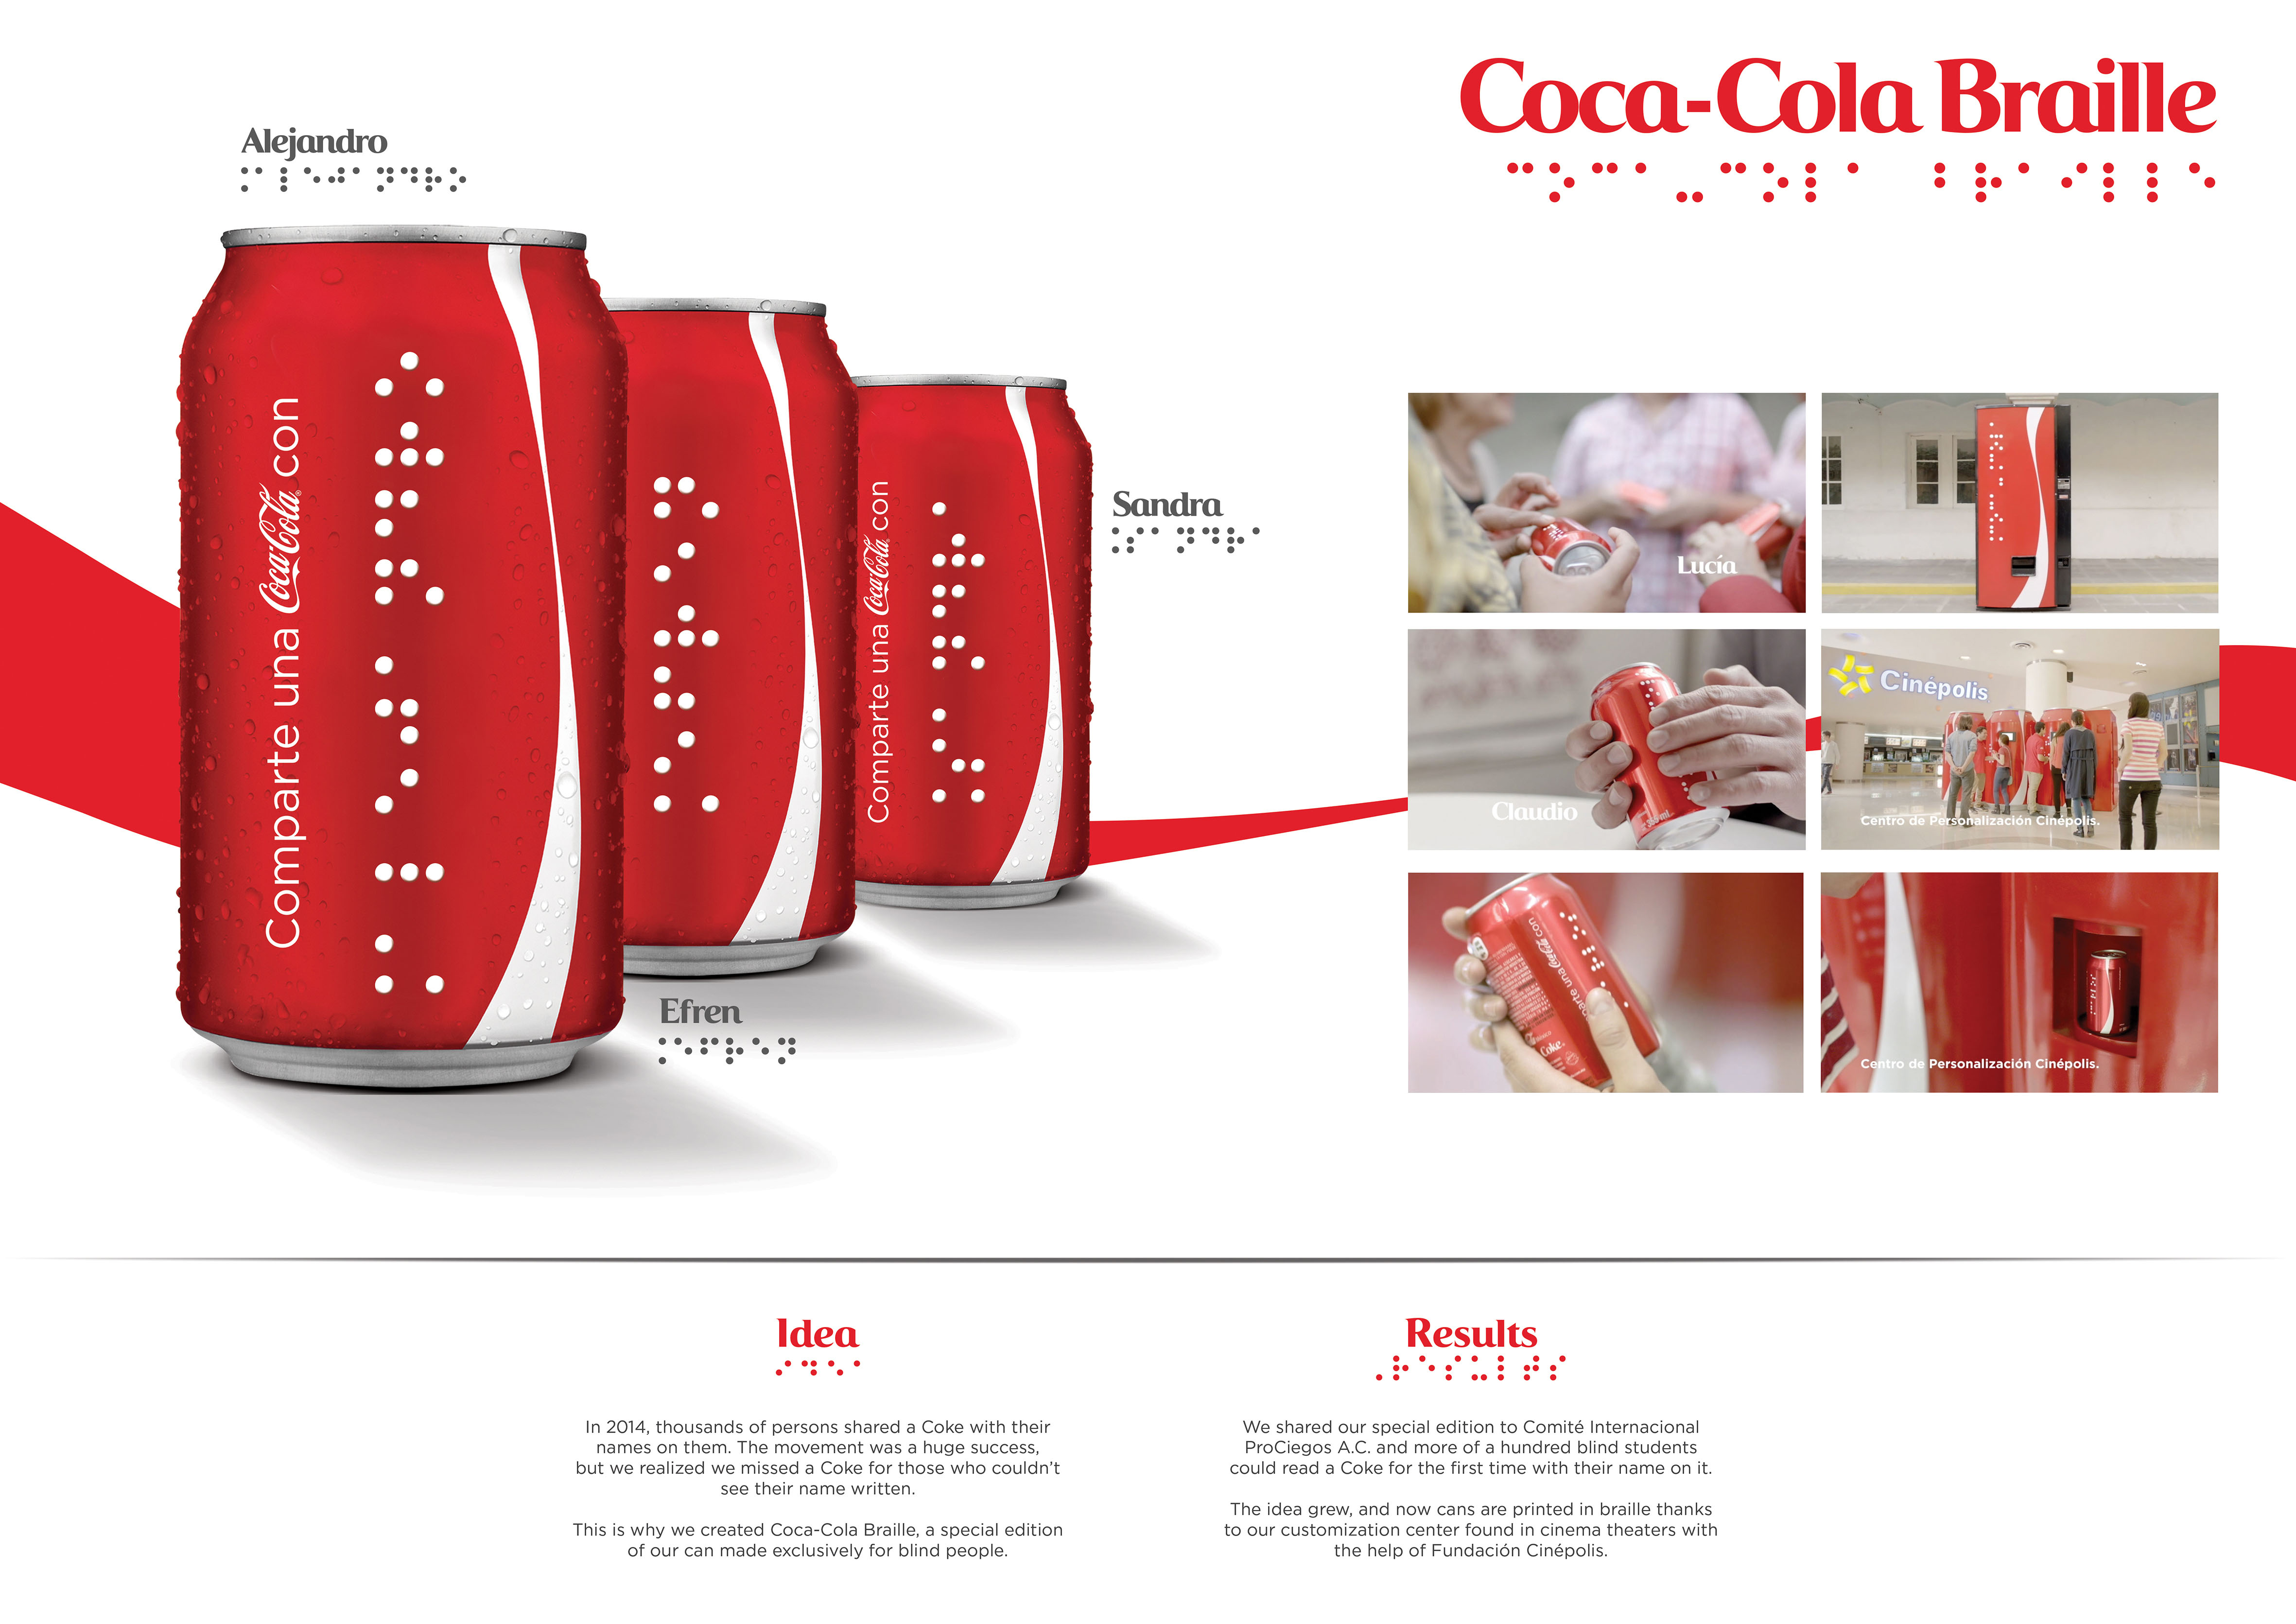 10 Inspiring Digital Marketing Campaigns From Coca-cola